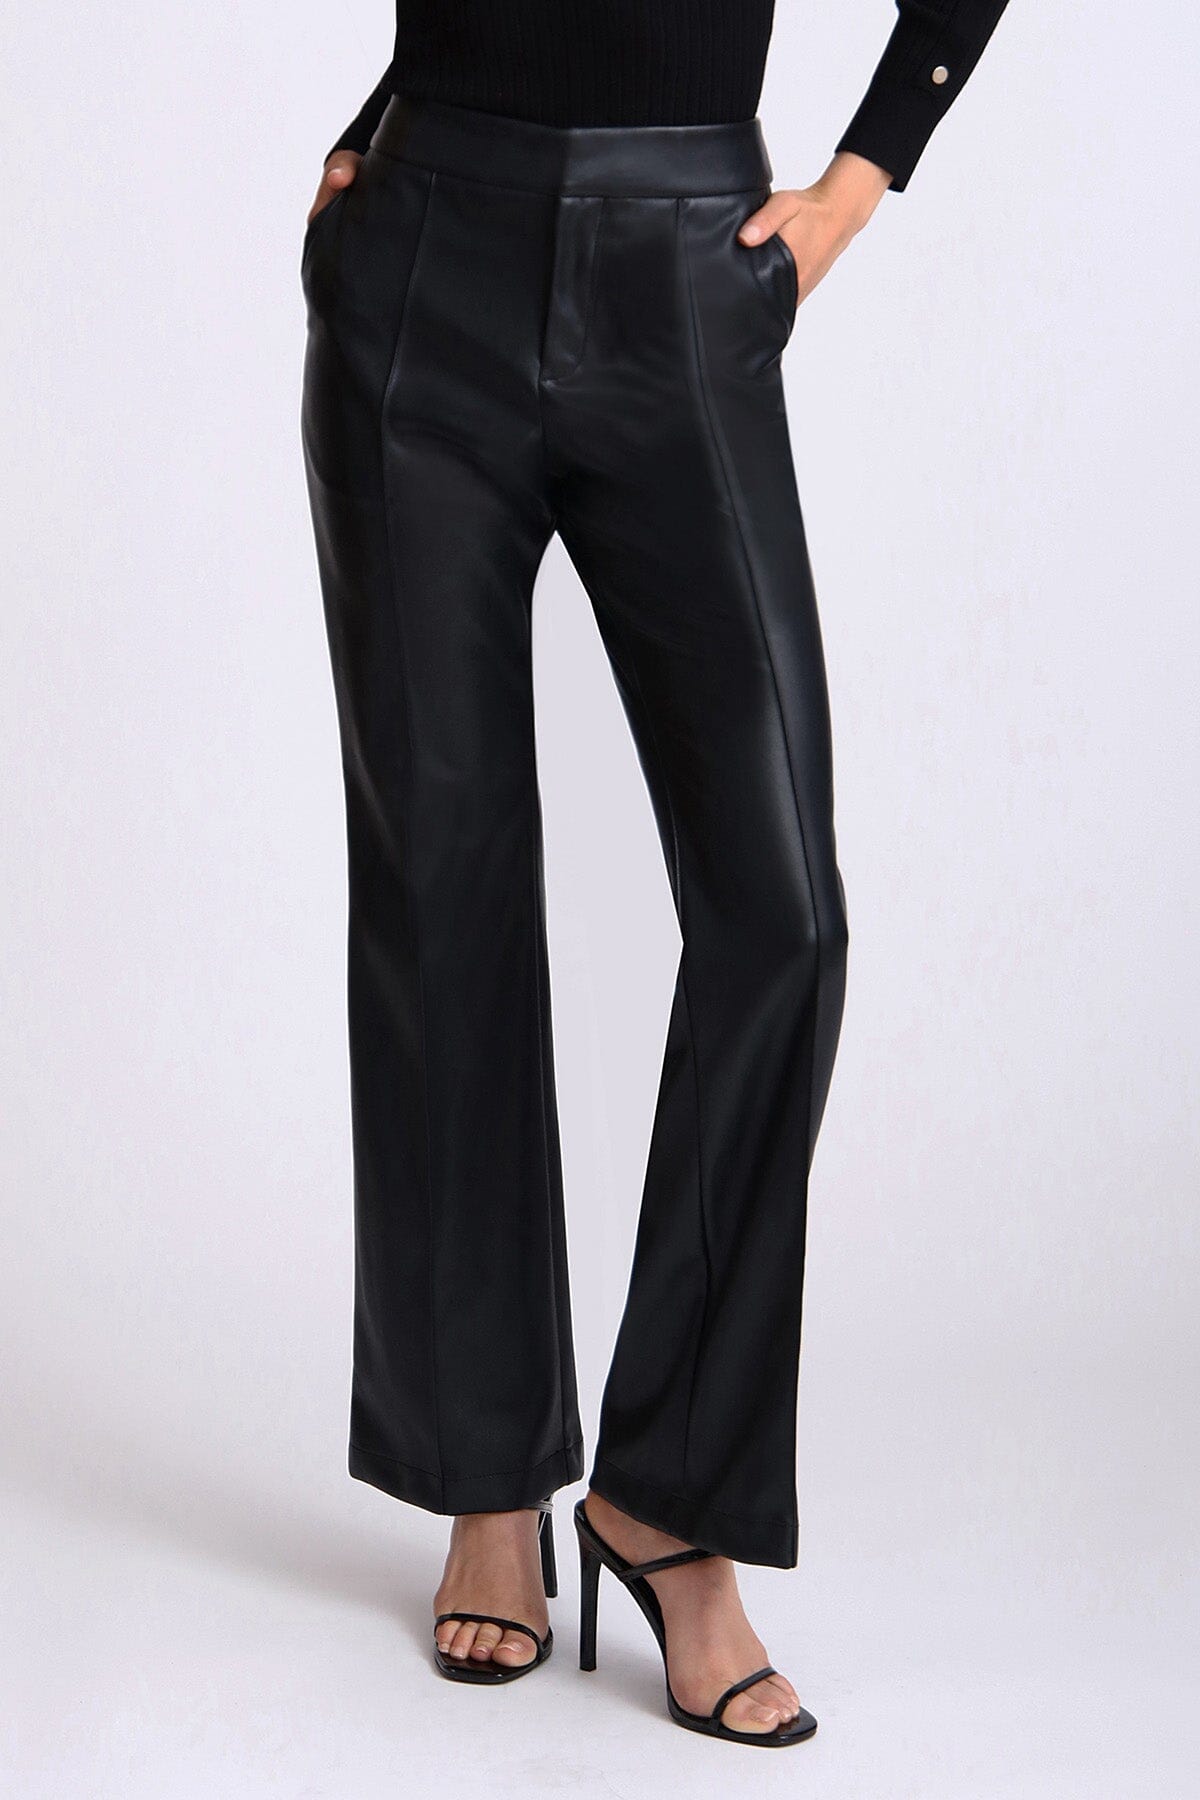 Black faux leather high waisted flare leg trouser pants by Avec Les Filles